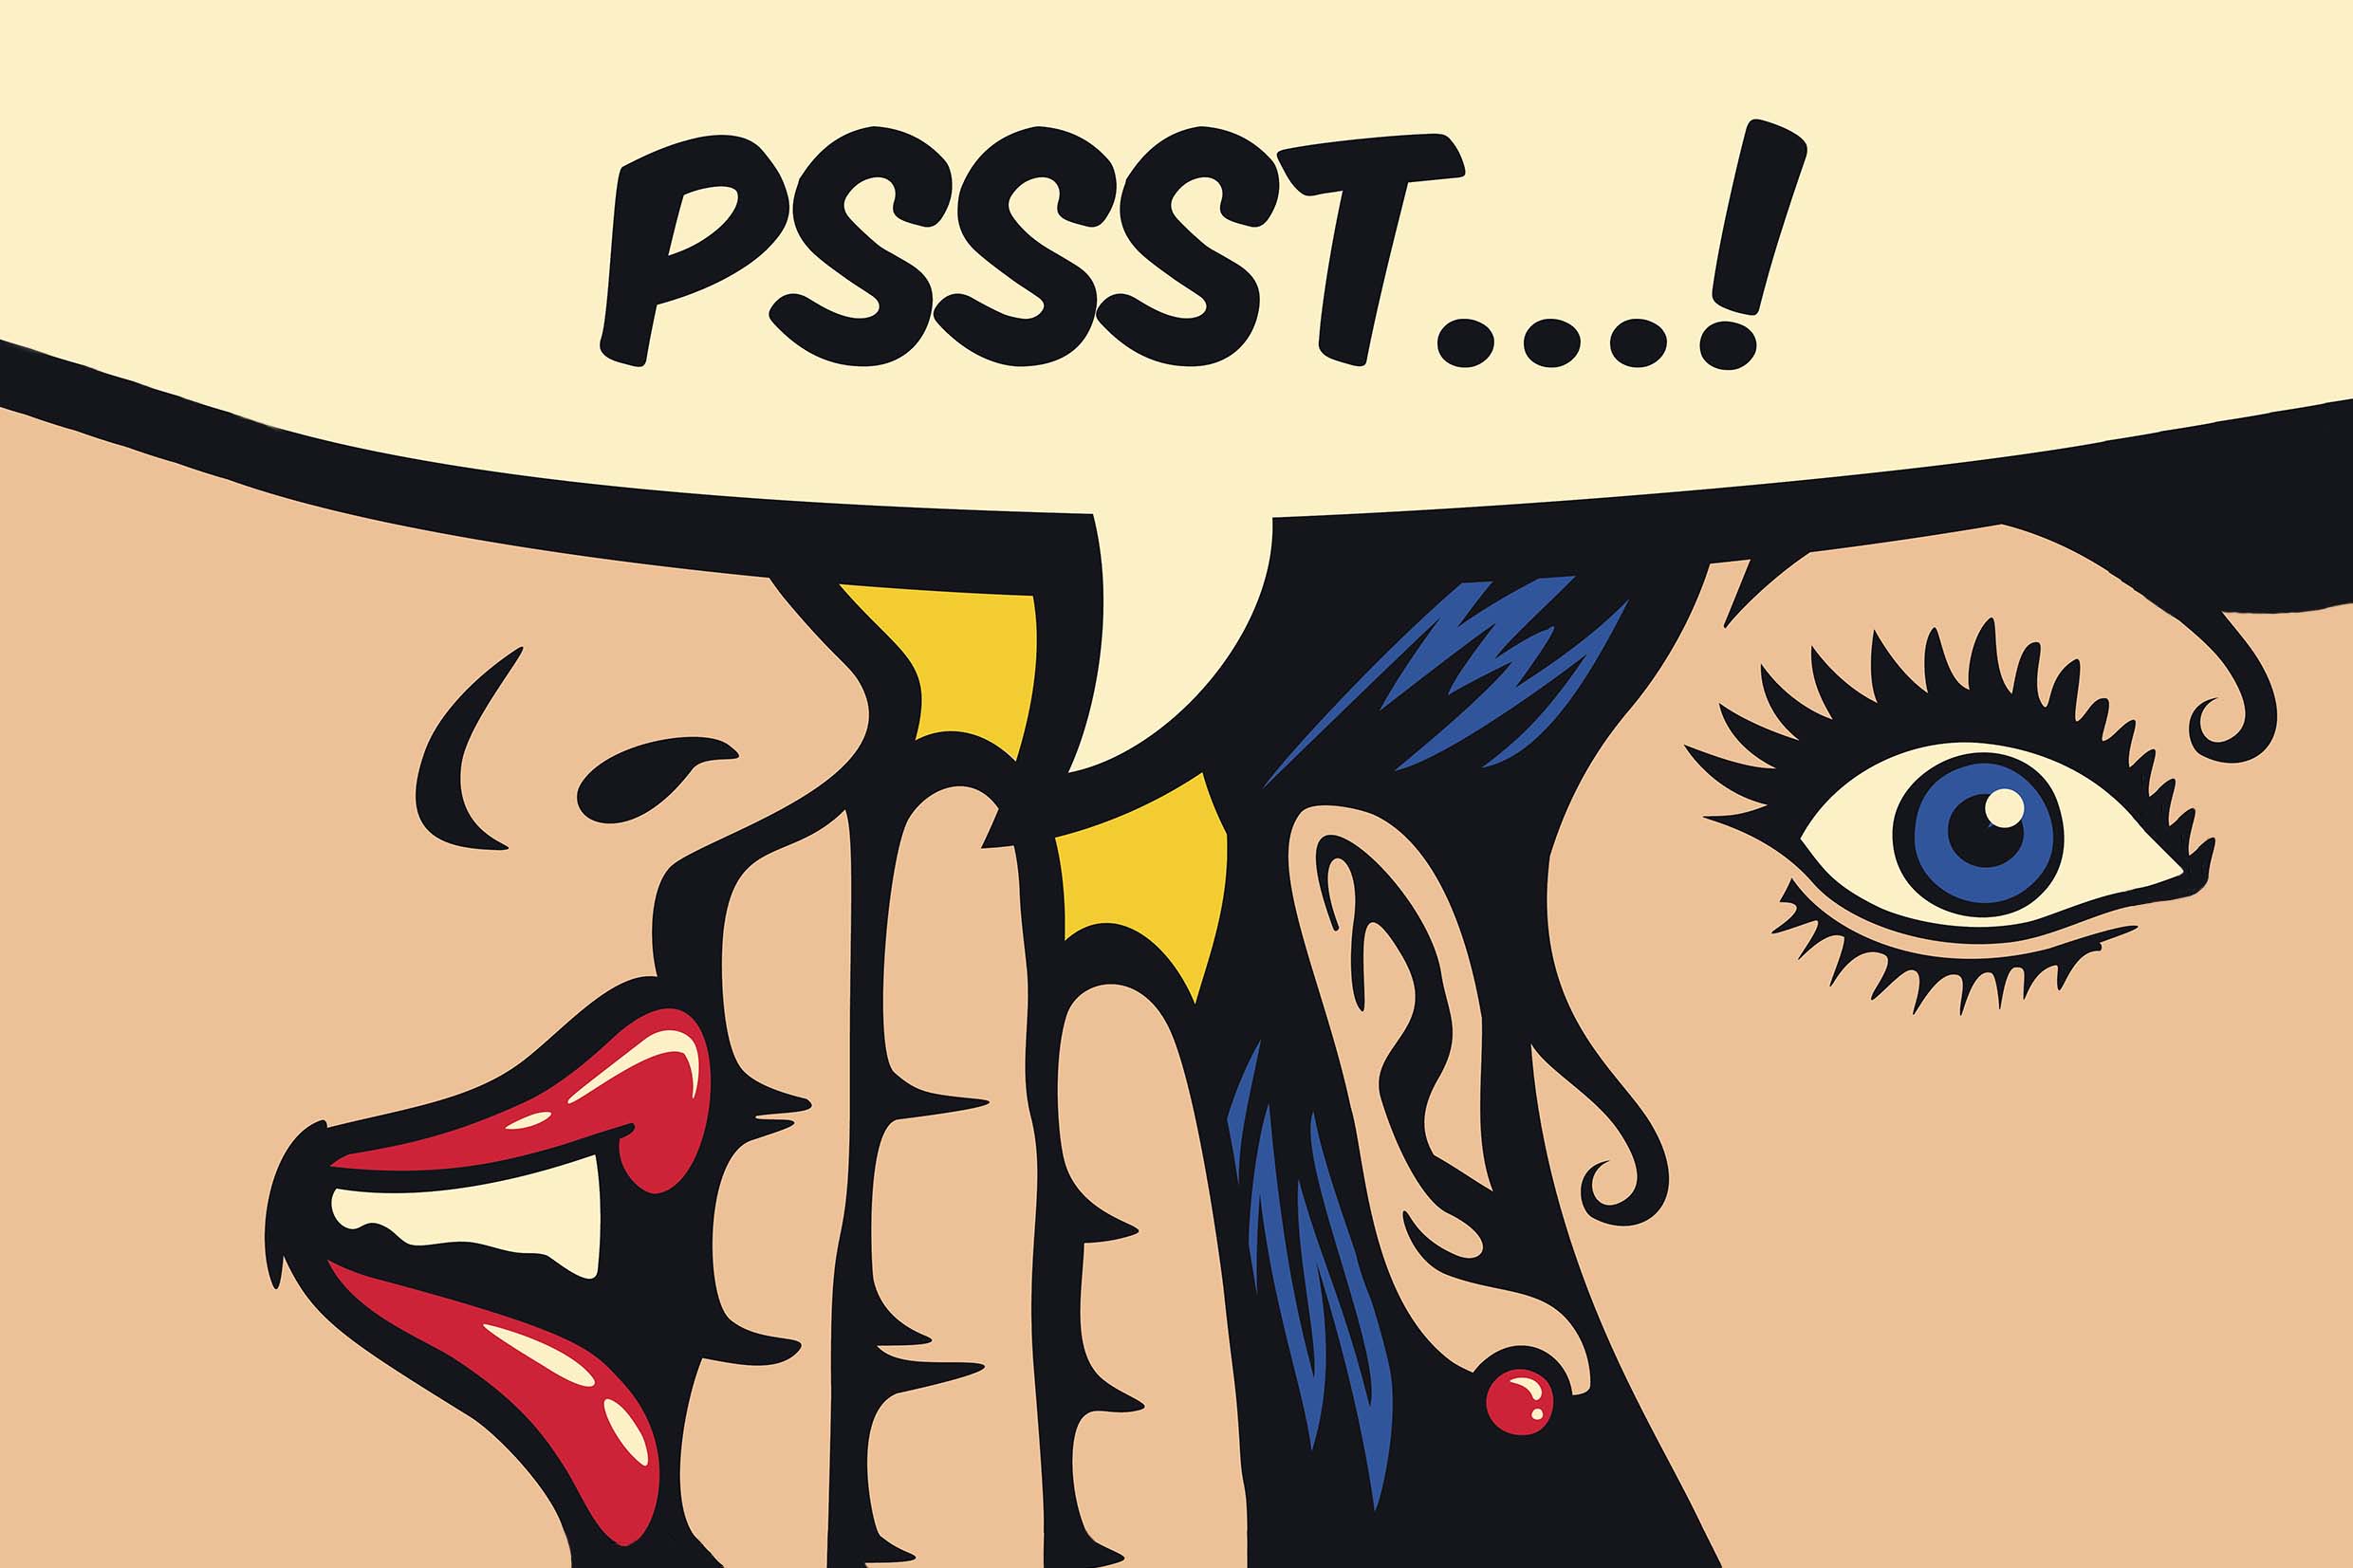 Pop art style comics panel gossip girl whispering secret in ear word of mouth vector illustration